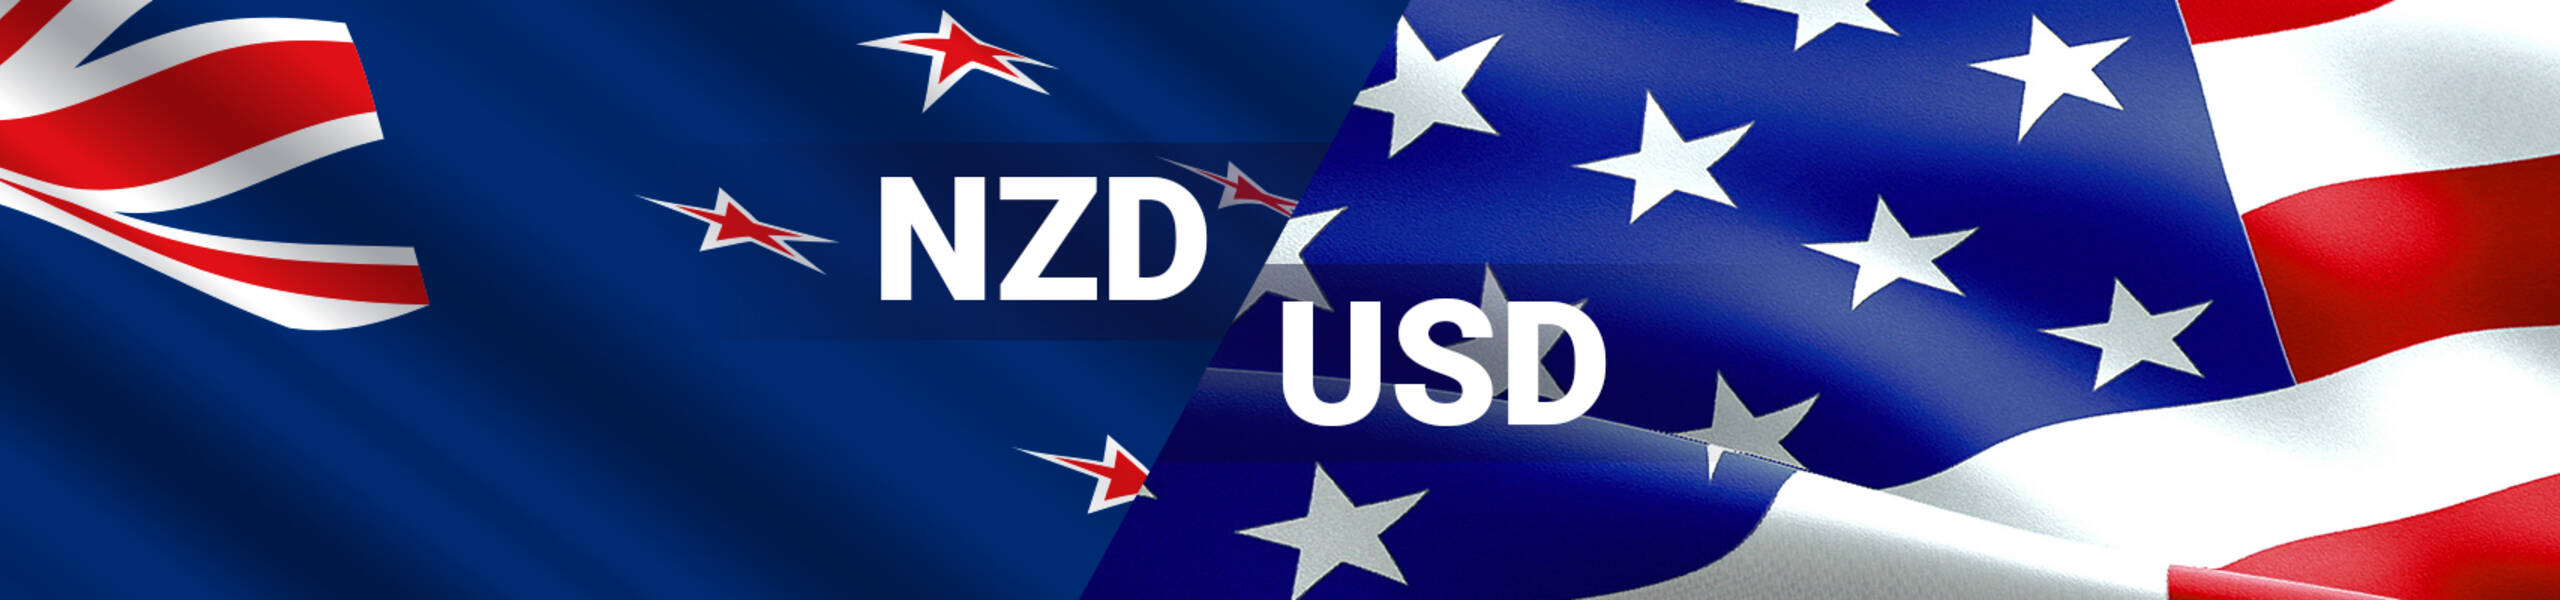 NZD/USD broke key support level 0.7050